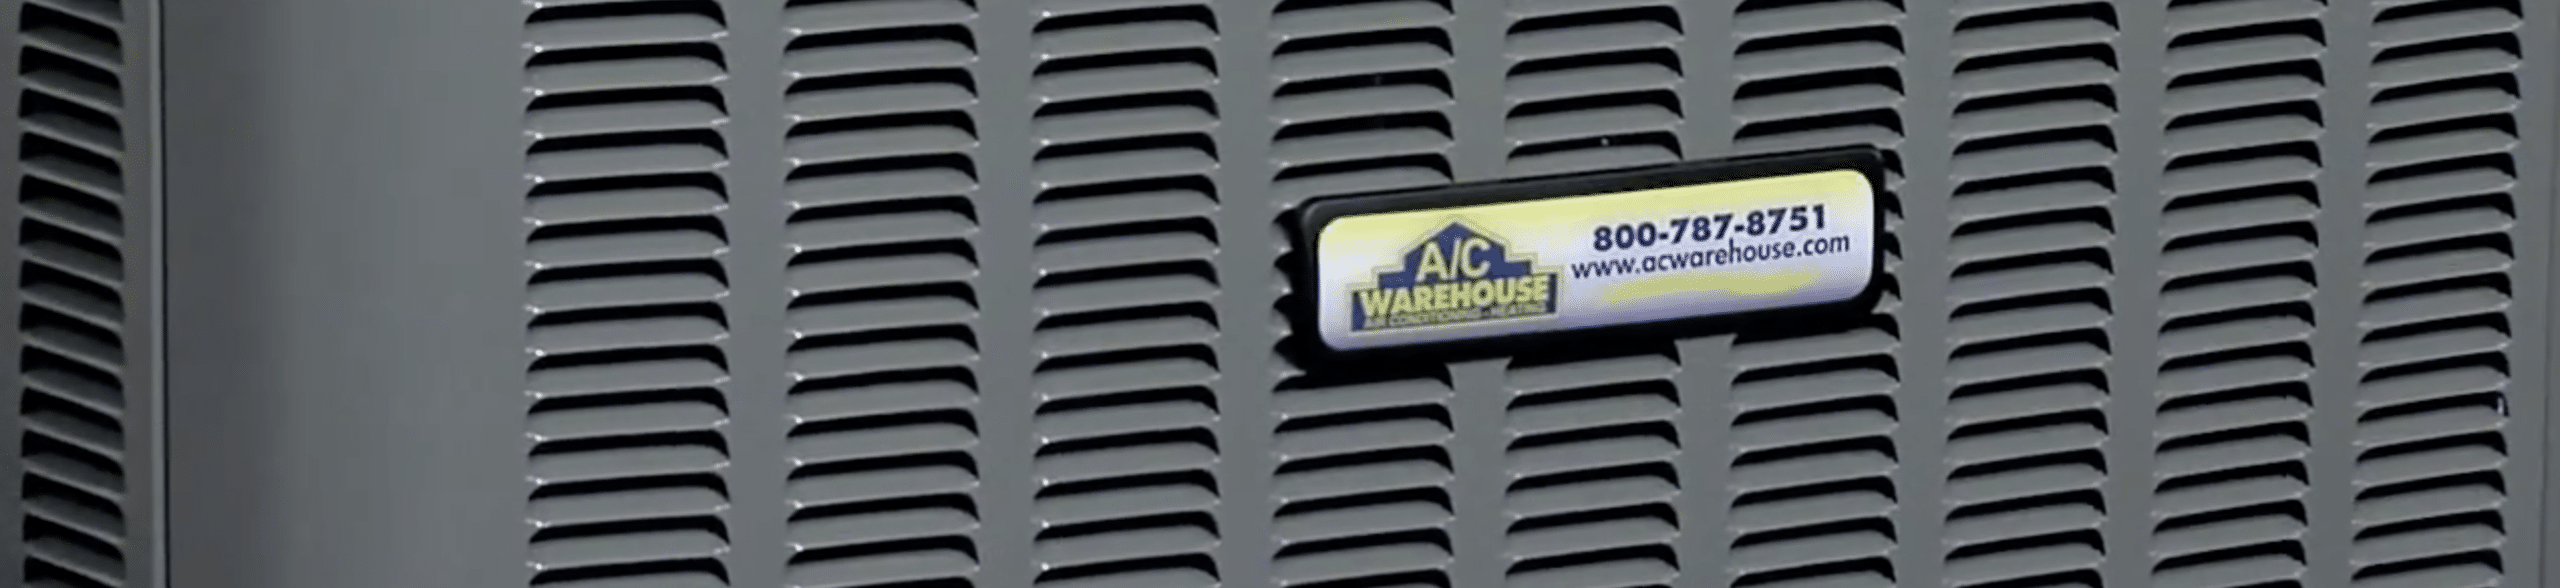 AC warehouse brand-major brands